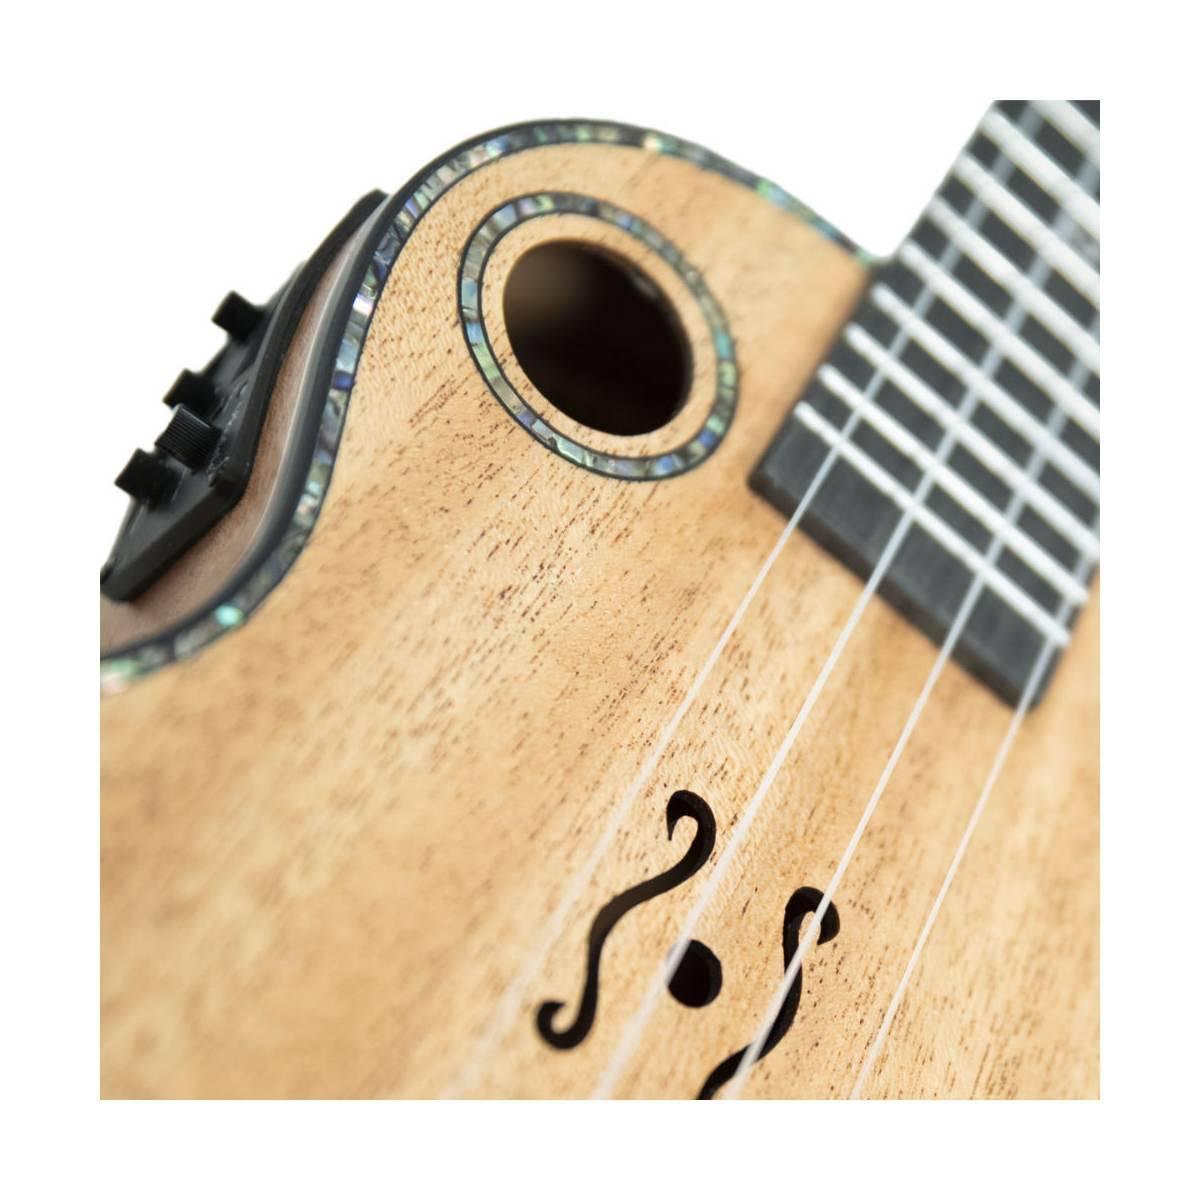 Oqan quk-arawak concert ukulele concerto natural